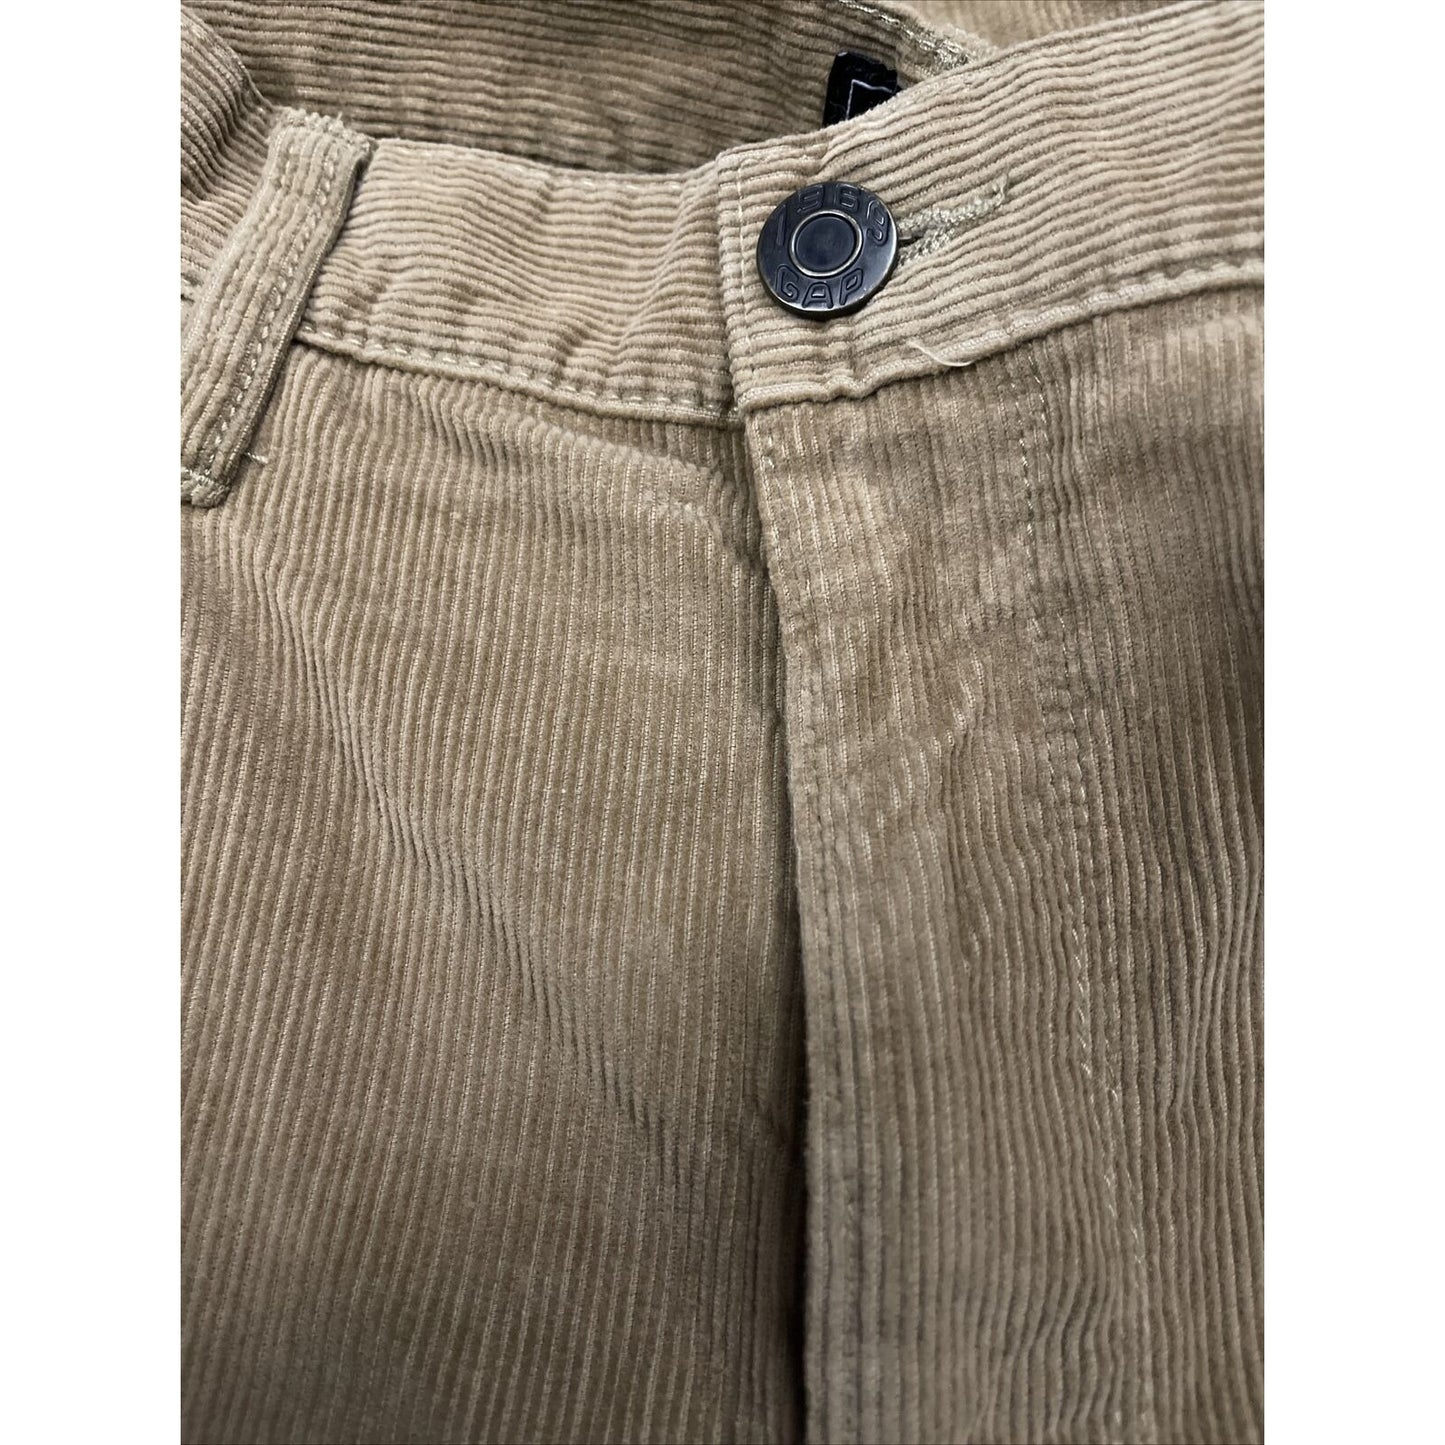 Men’s Tan Gap Pants 36x32 straight fit